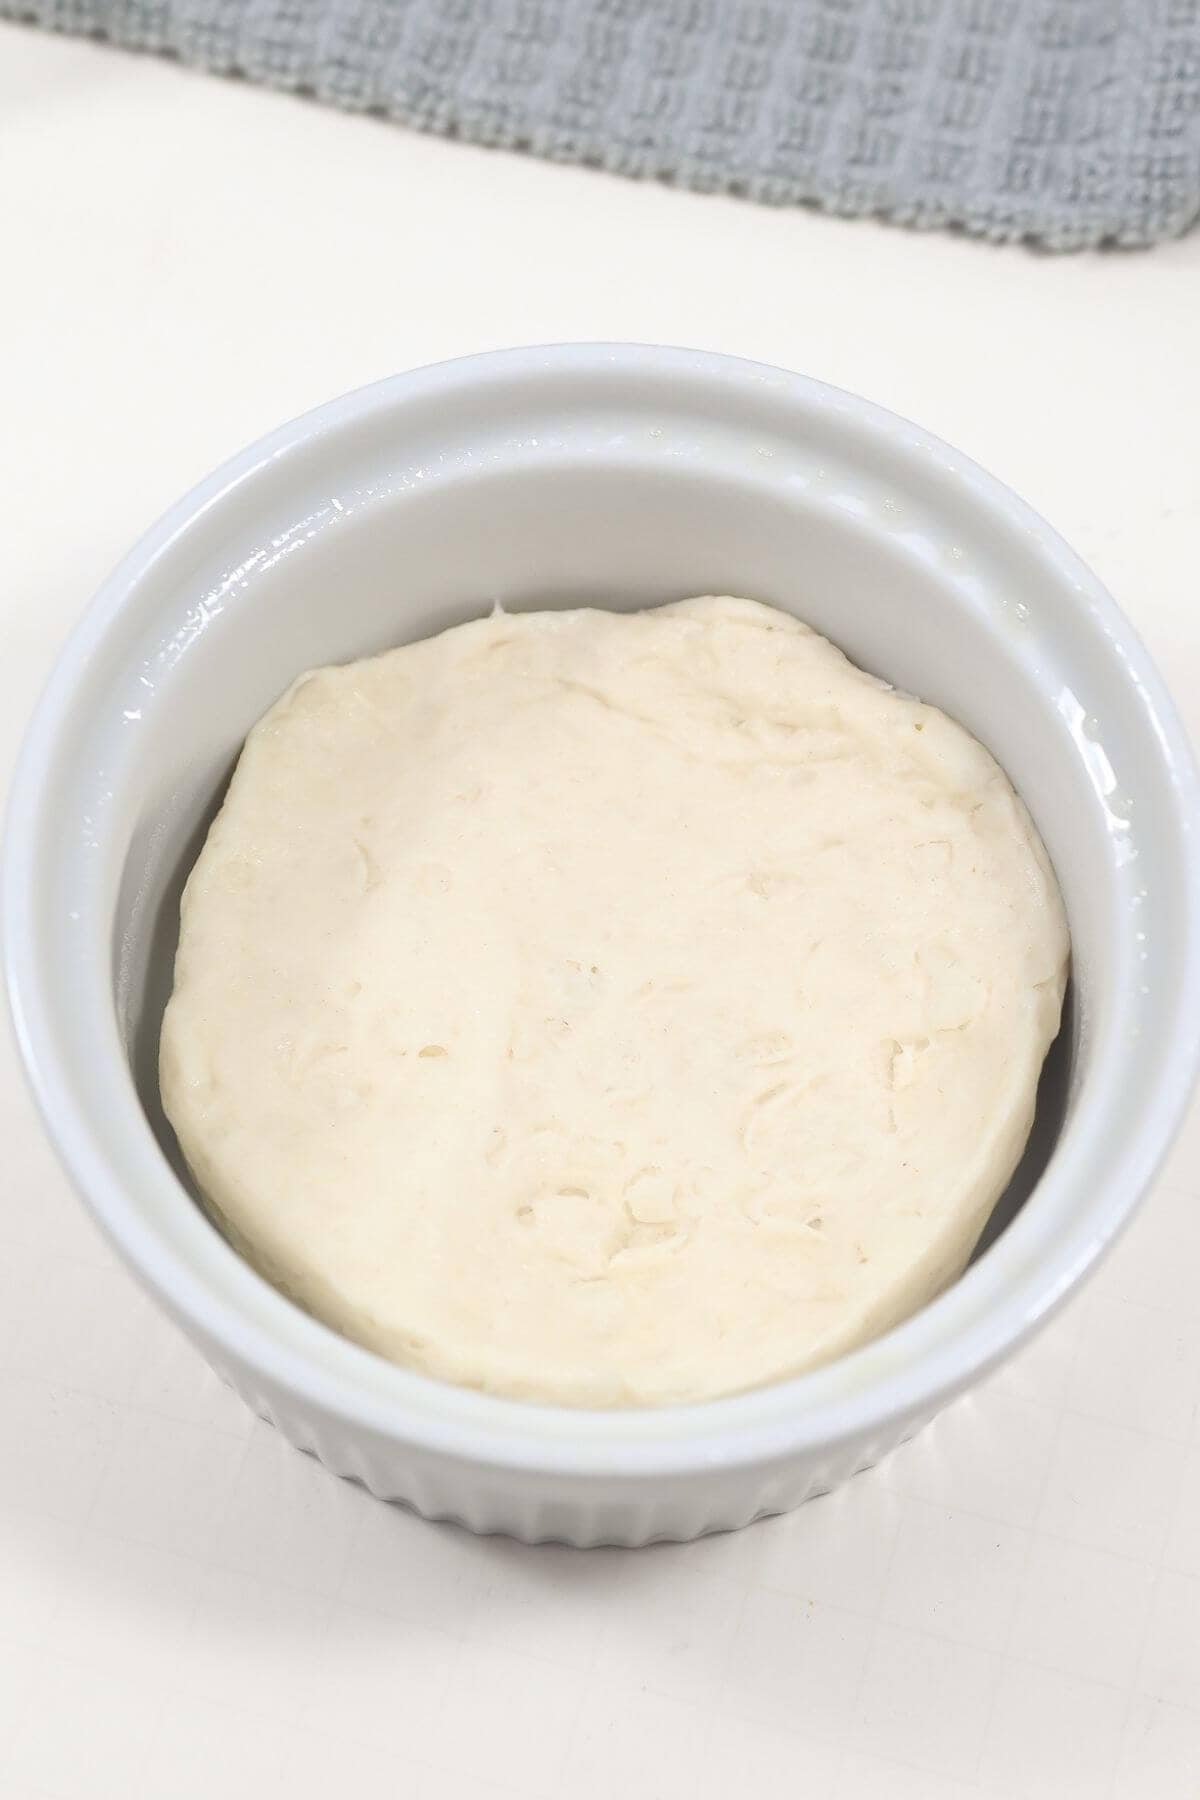 Biscuit dough in a white ceramic bowl.